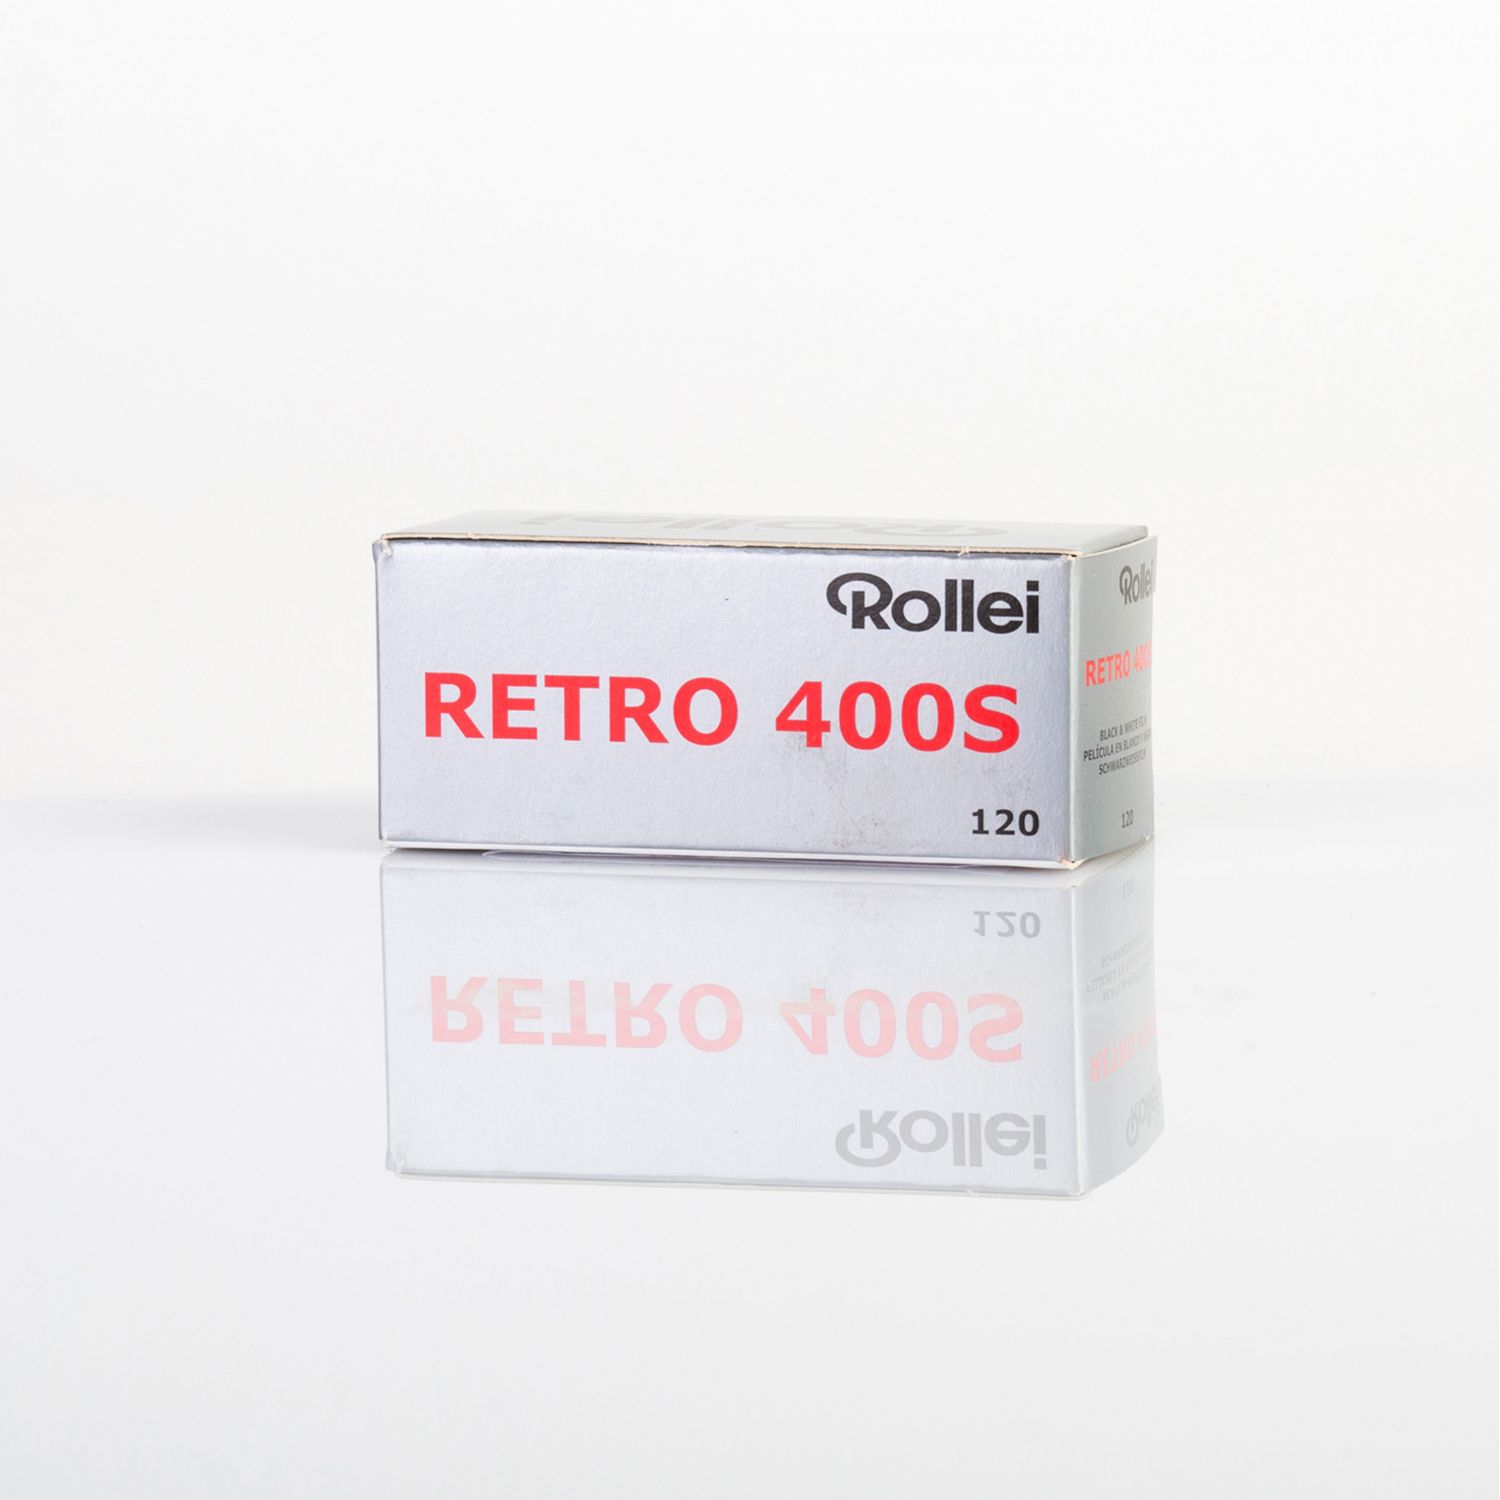 ROLLEI Retro 400S - 1 rouleau 120